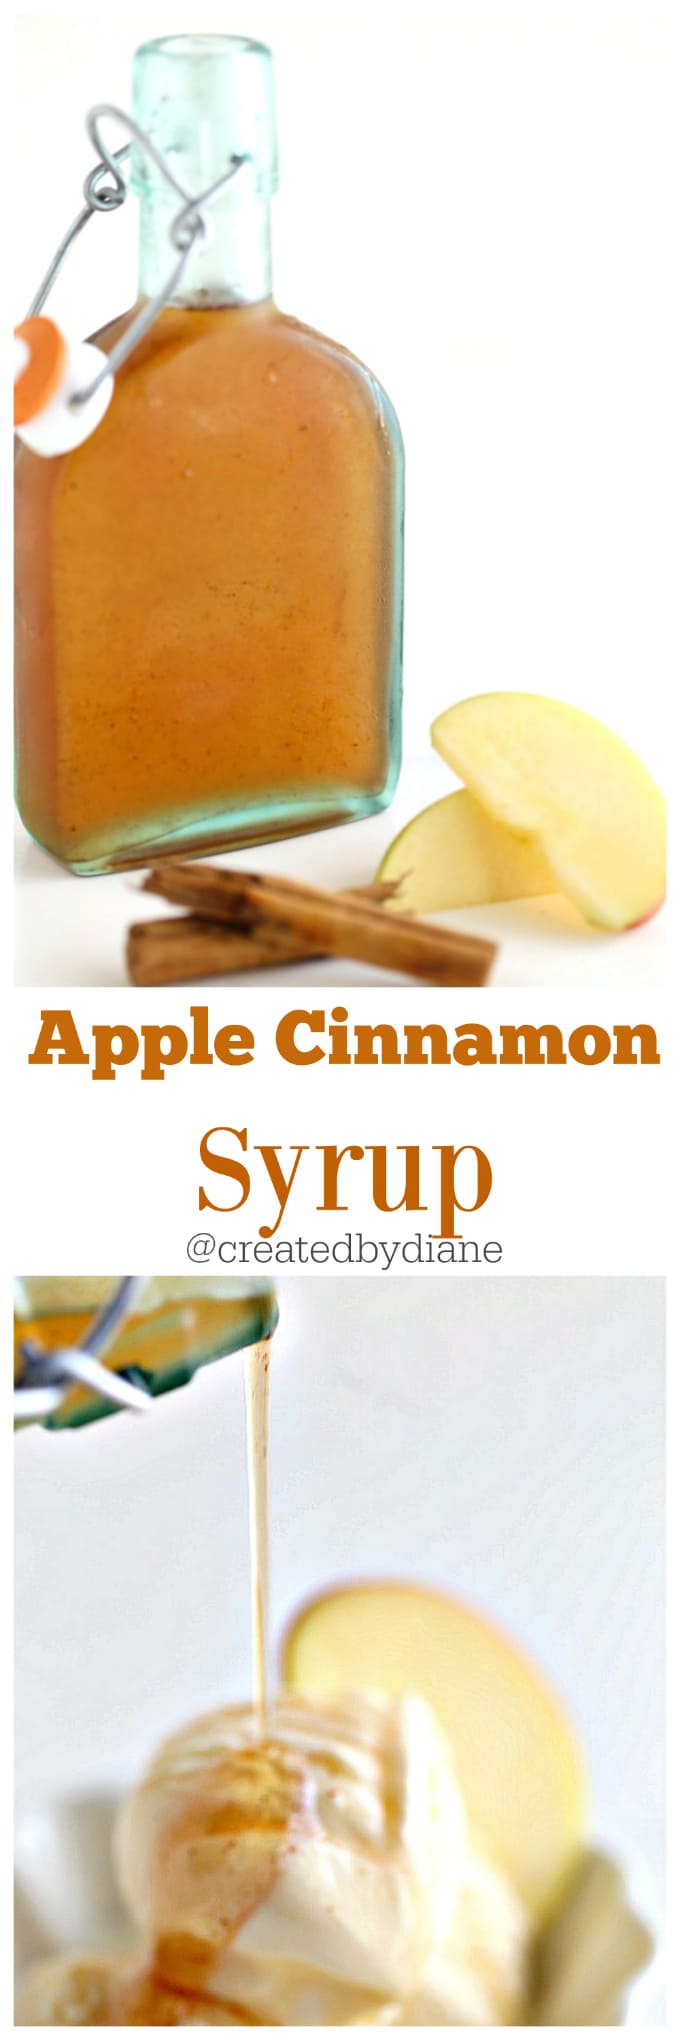 apple-cinnamon-syrup-recipe-createdbydiane